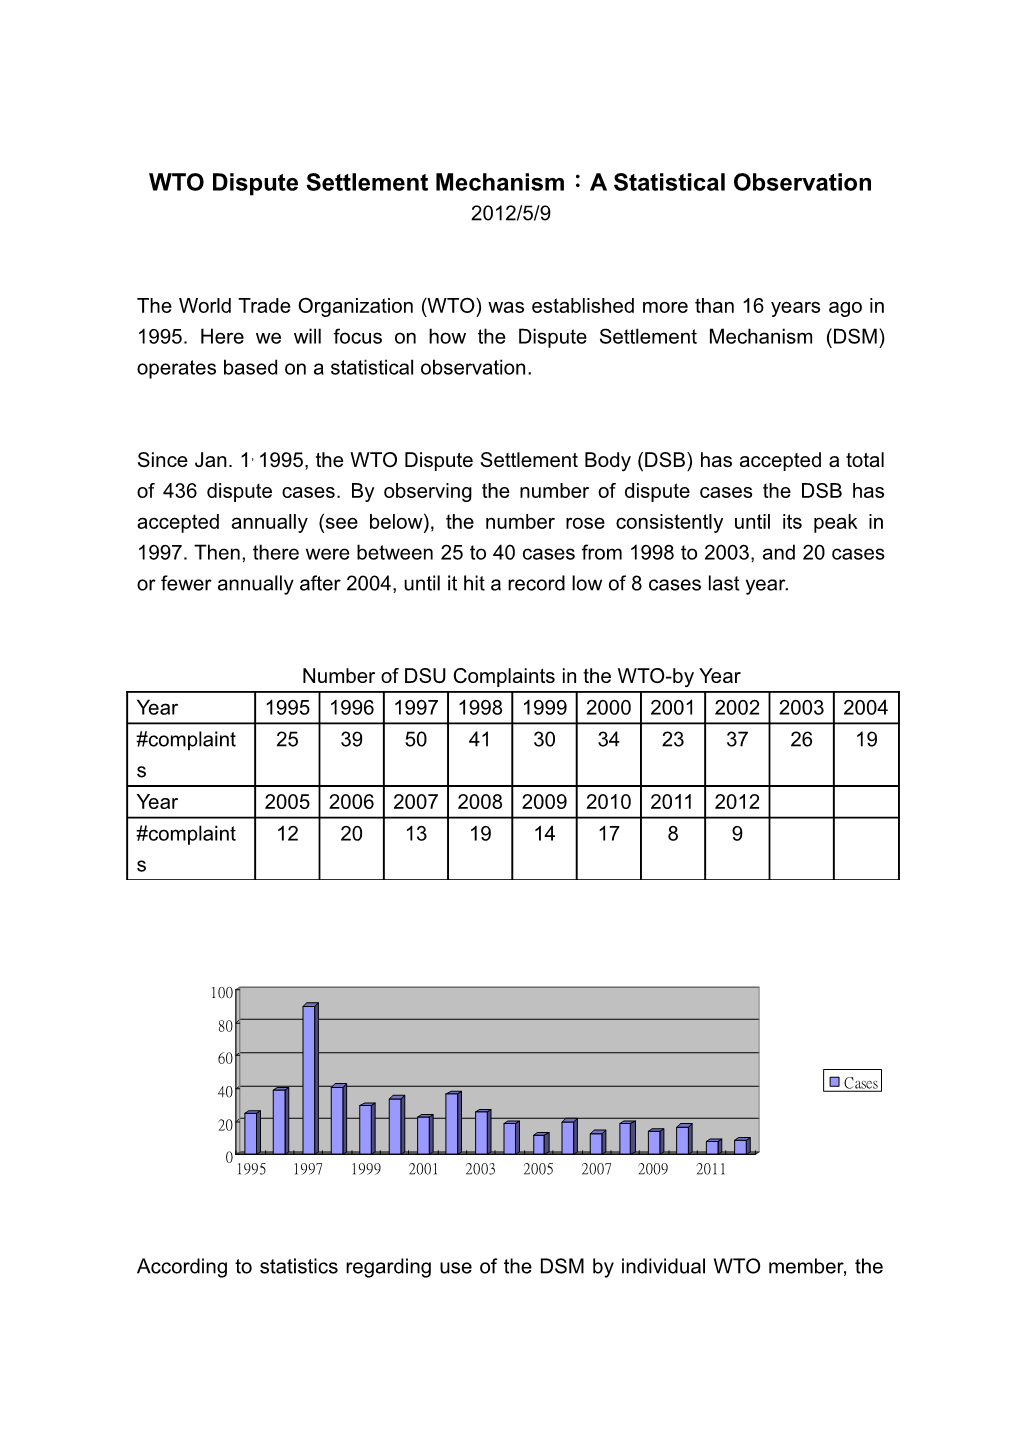 WTO Dispute Settlement Mechanism Statistical Observation